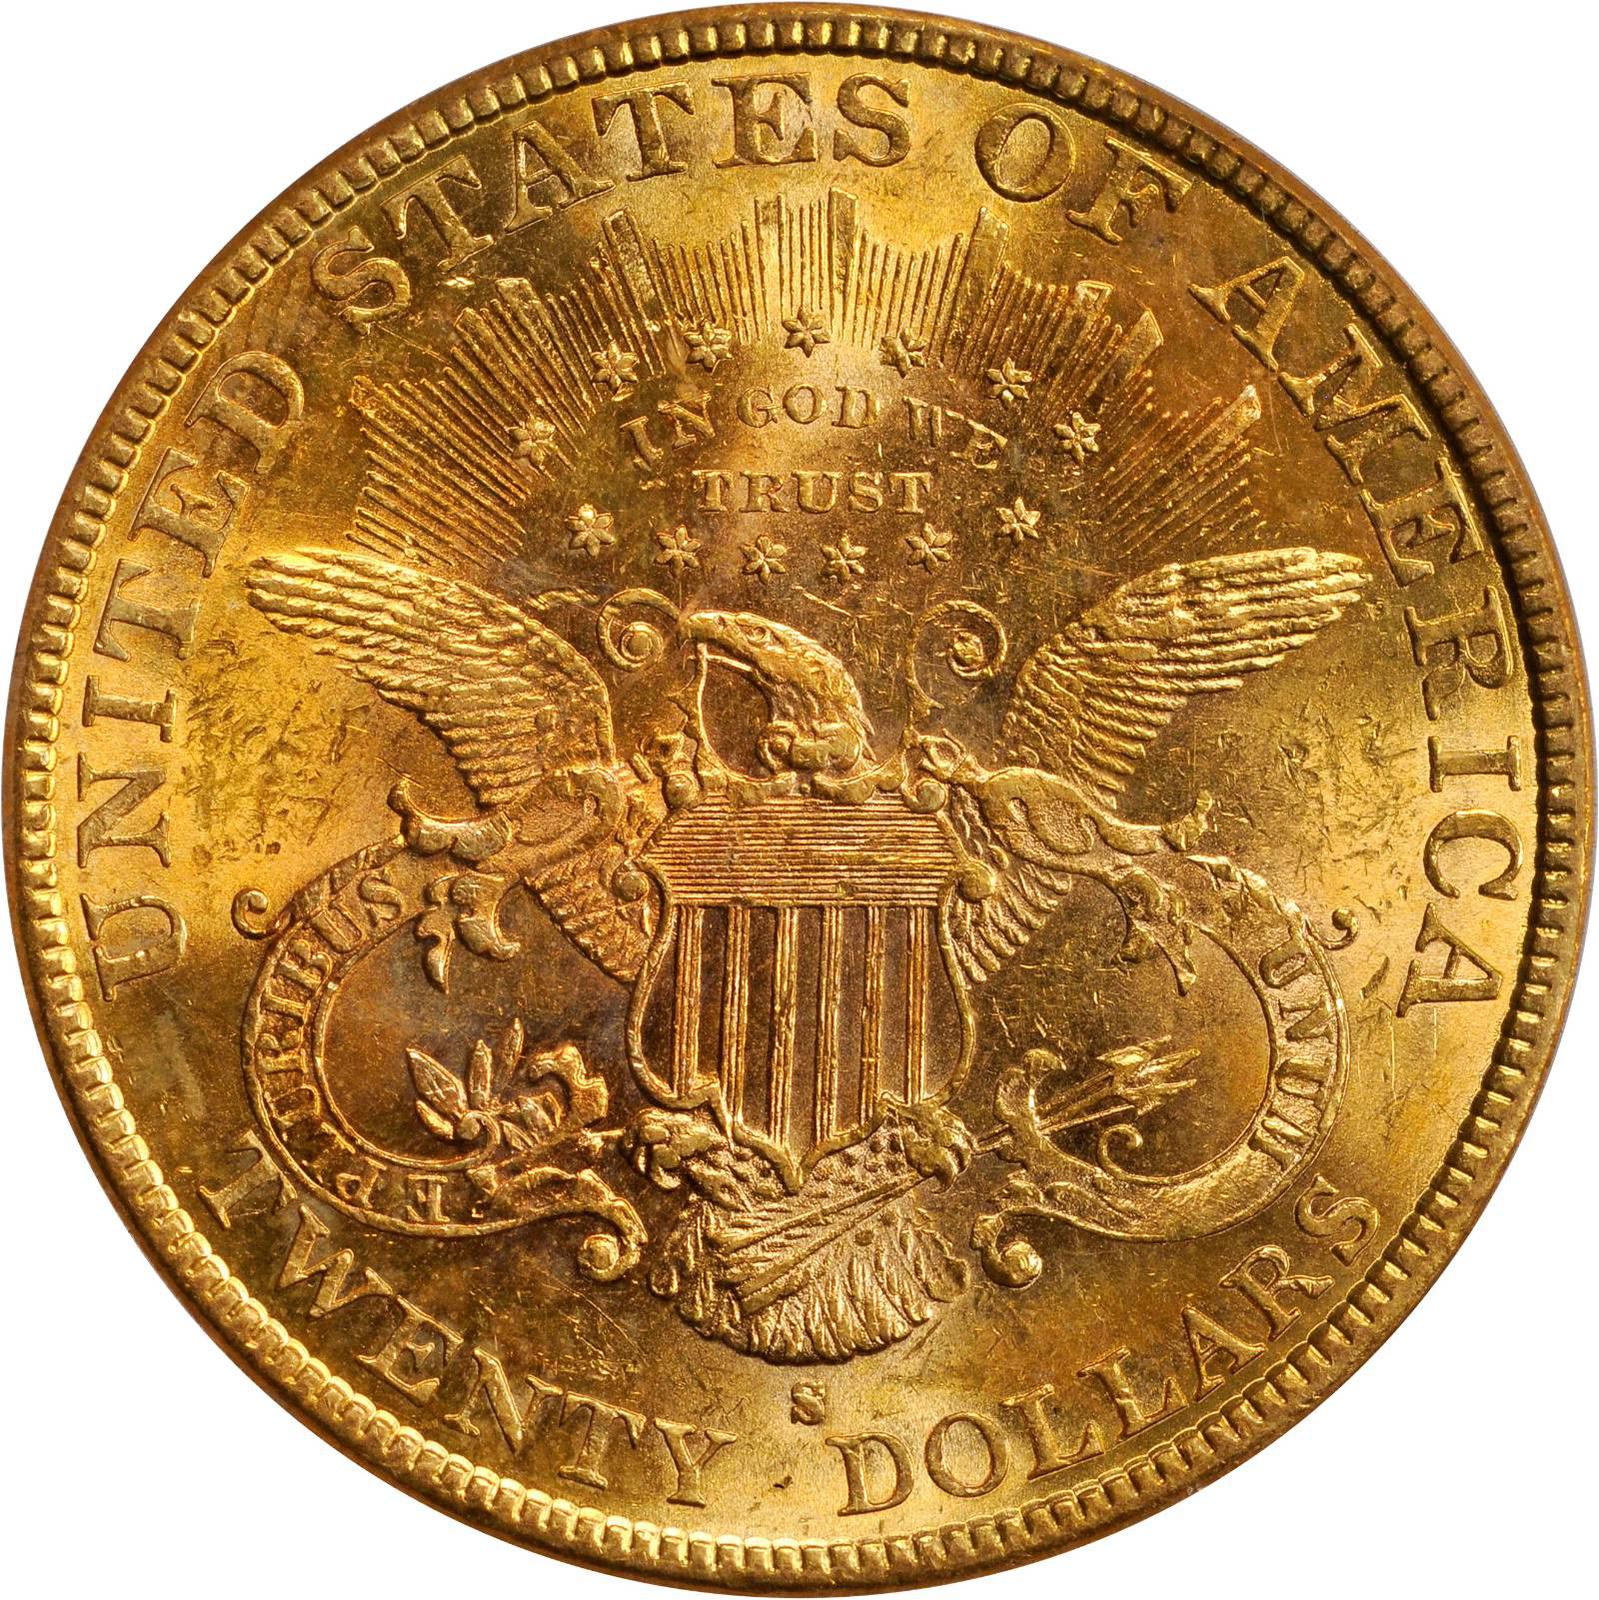 weight-of-20-dollar-gold-piece-new-dollar-wallpaper-hd-noeimage-org